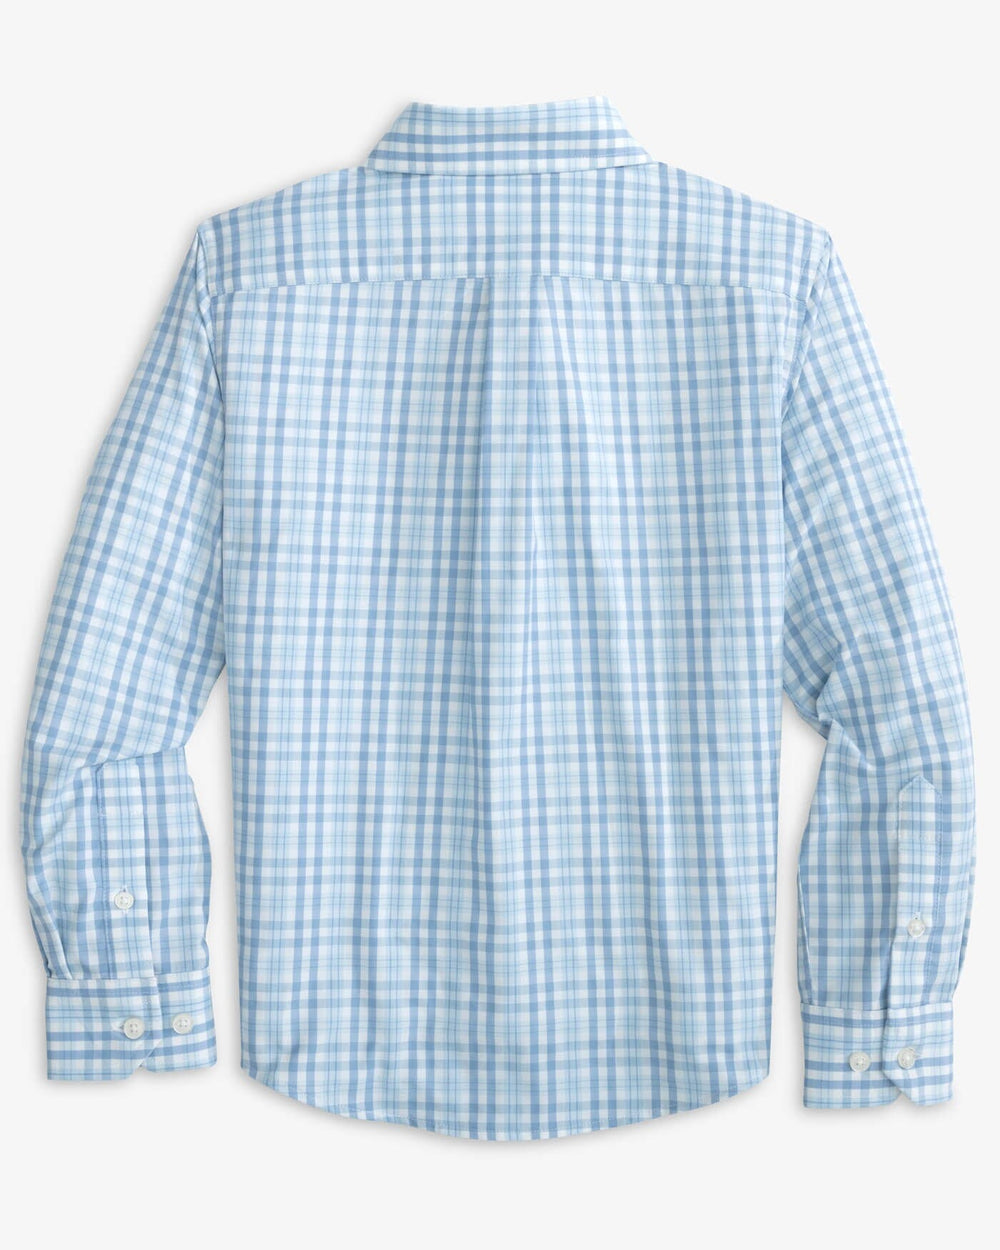 Boys Haywood Plaid Intercoastal Long Sleeve Sport Shirt